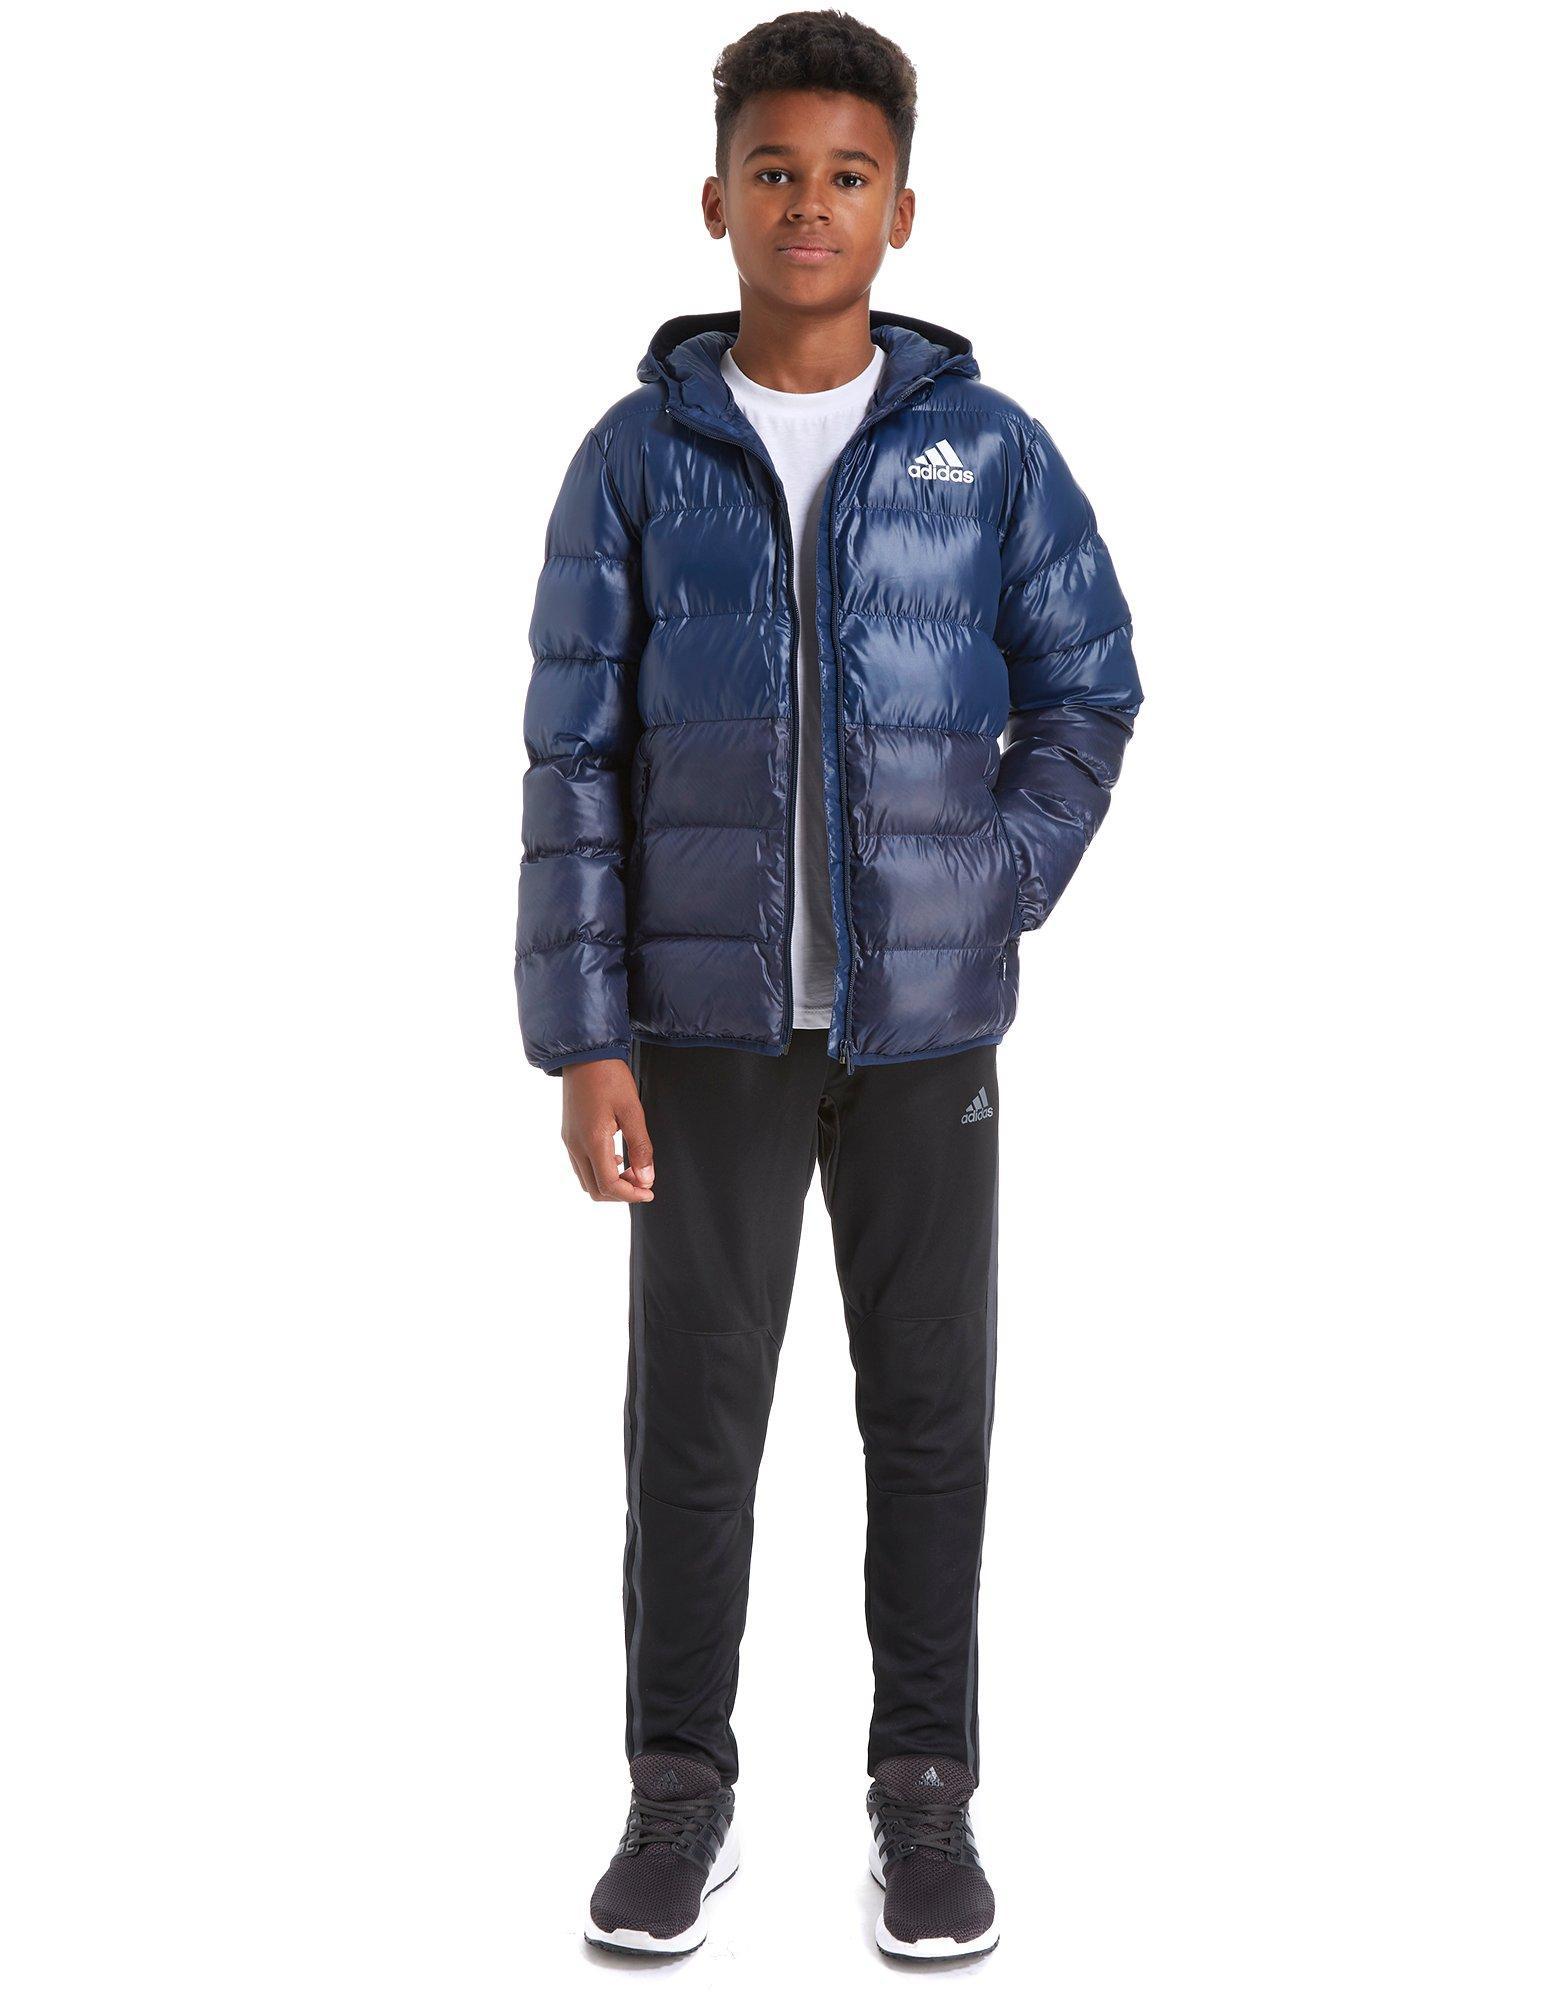 Buy > adidas jacket junior > in stock